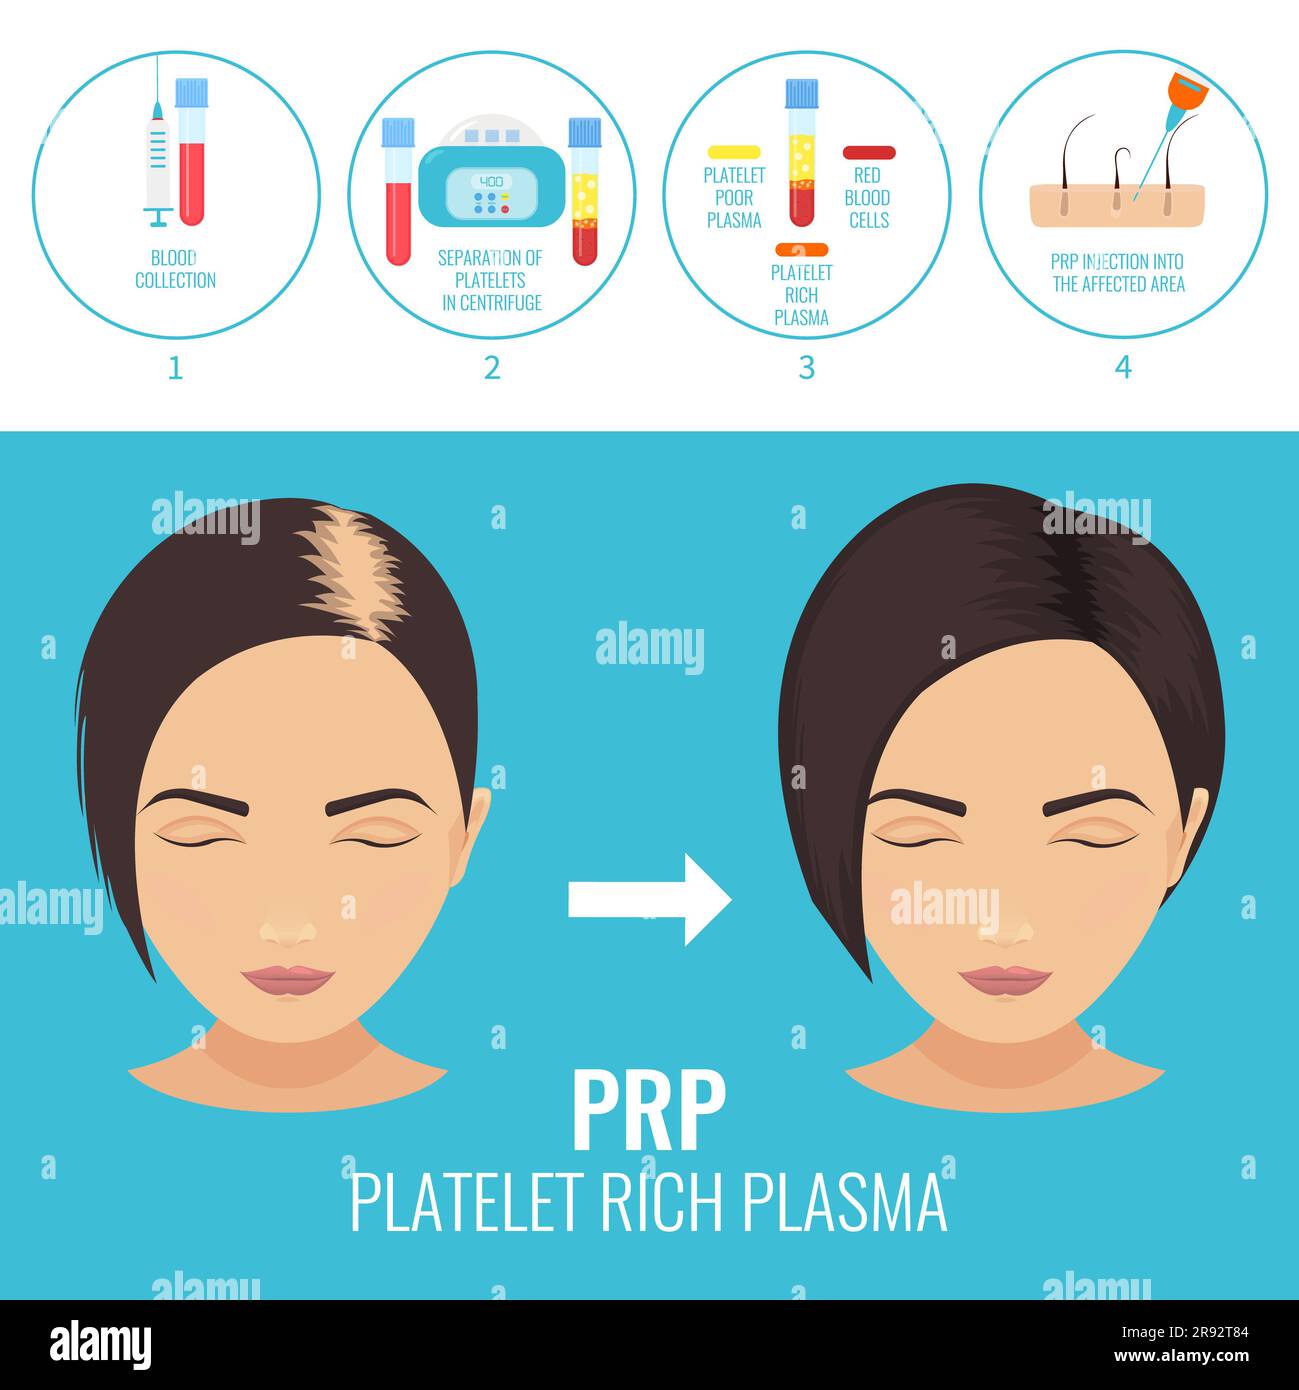 PRP hair loss treatment, illustration Stock Photo